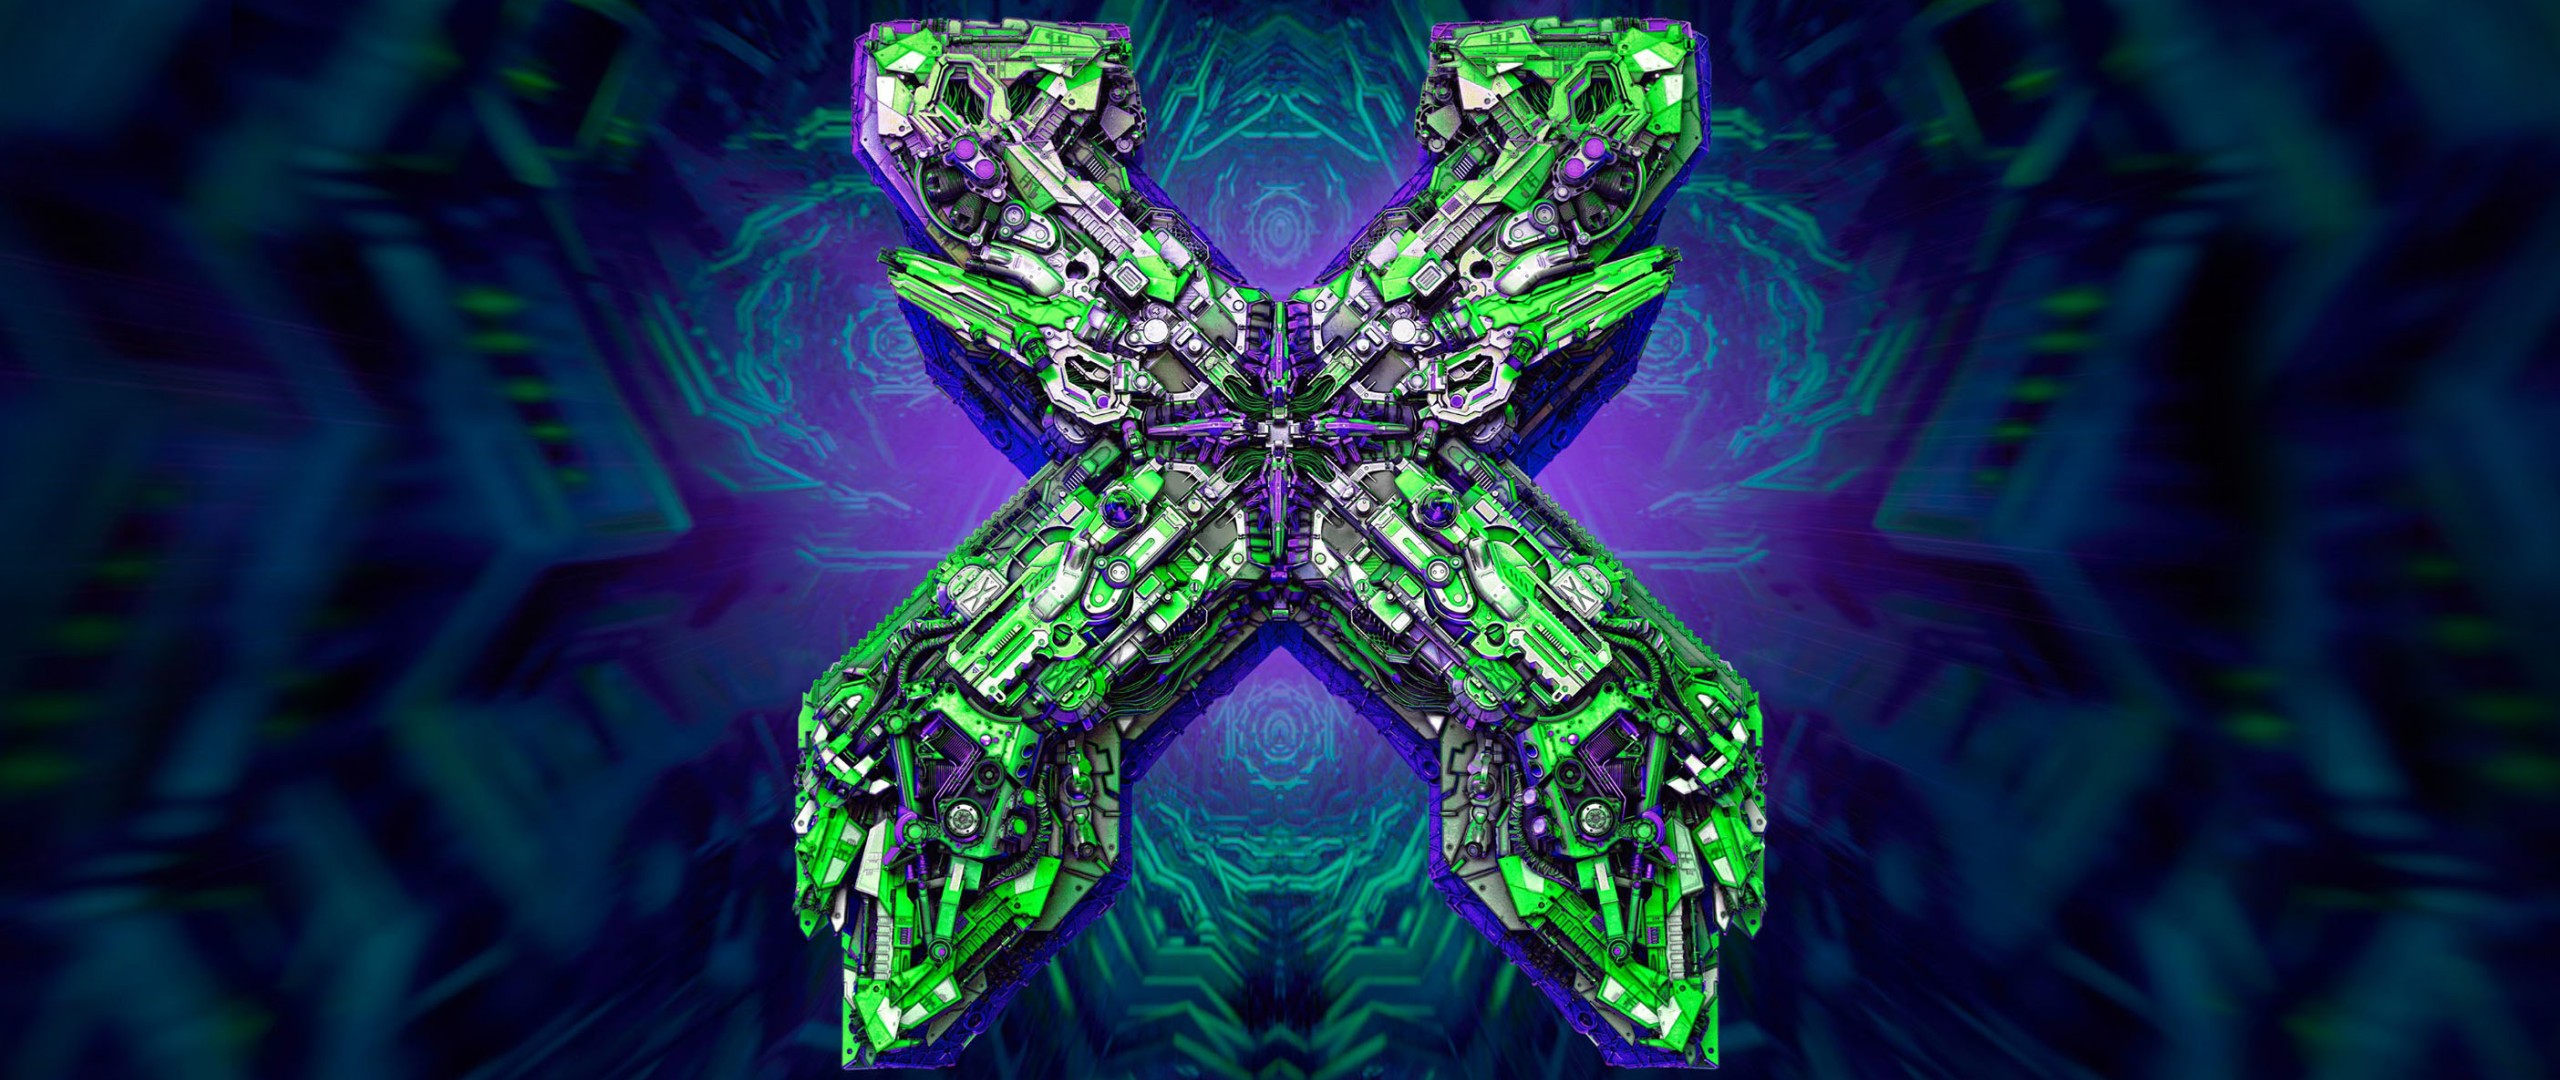 excision wallpaper,green,fractal art,purple,symmetry,psychedelic art